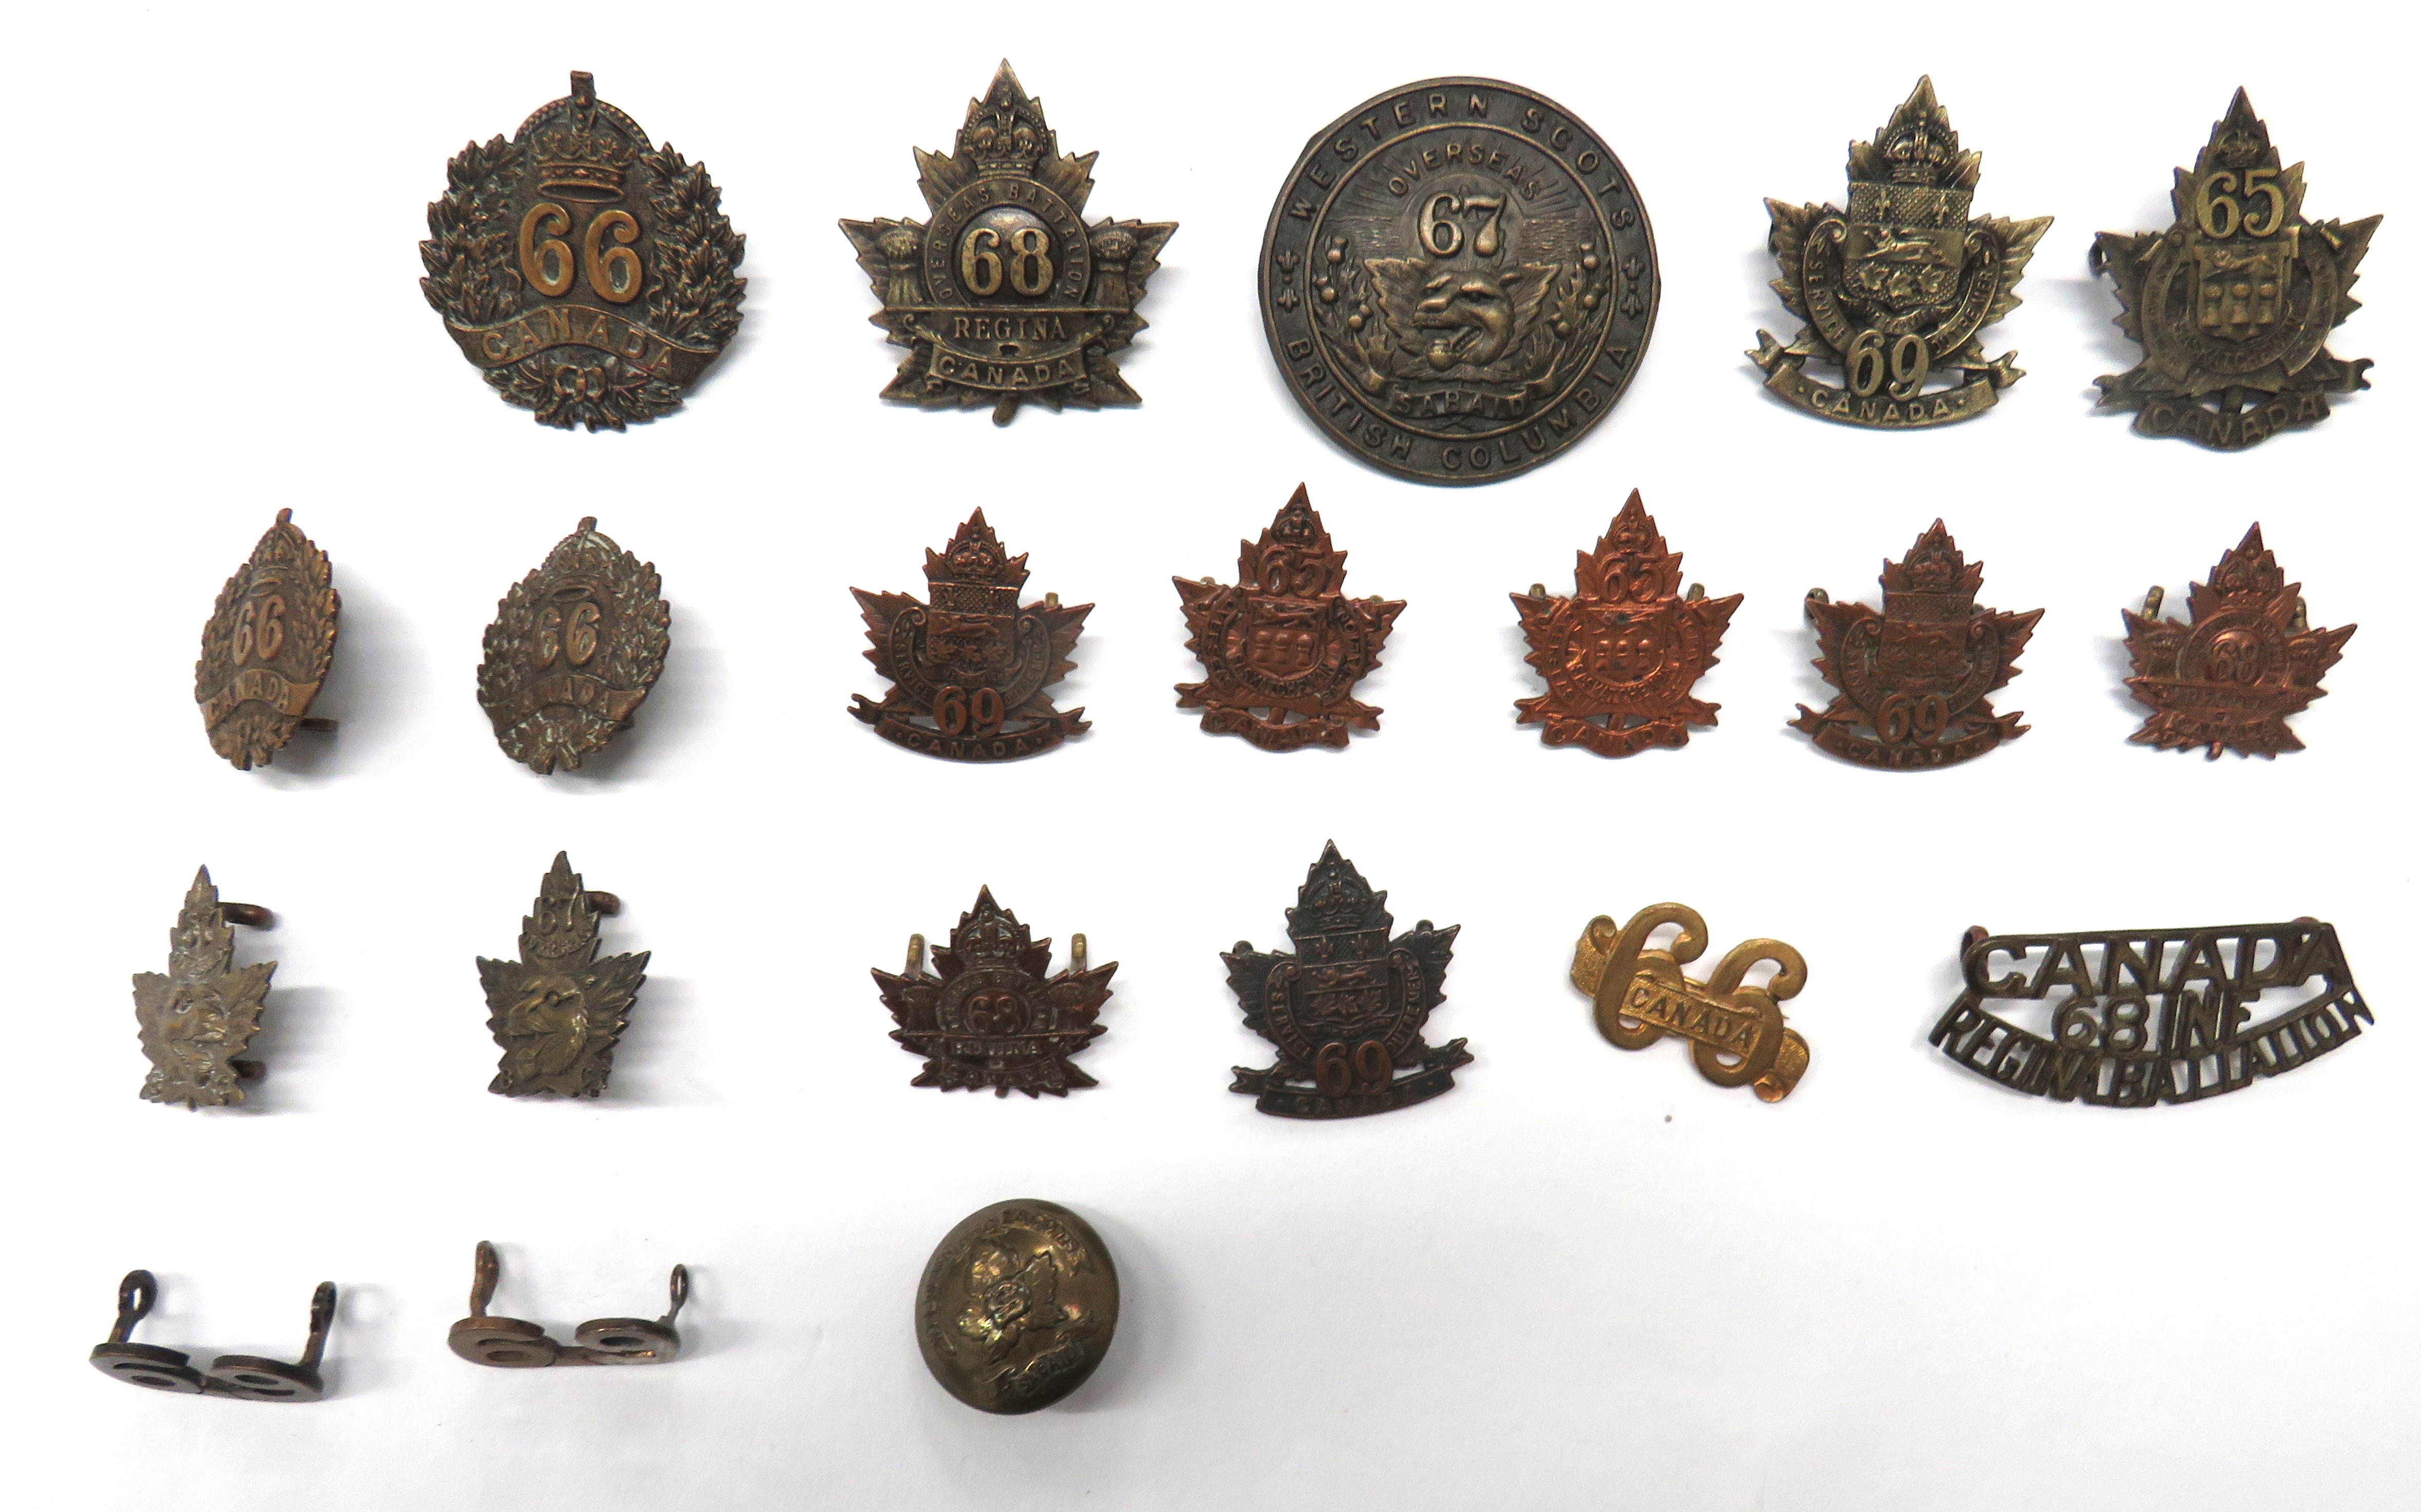 20 x Canadian WW1 Overseas Battalion Cap, Collars And Titles cap consist darkened KC 65 Saskatchewan